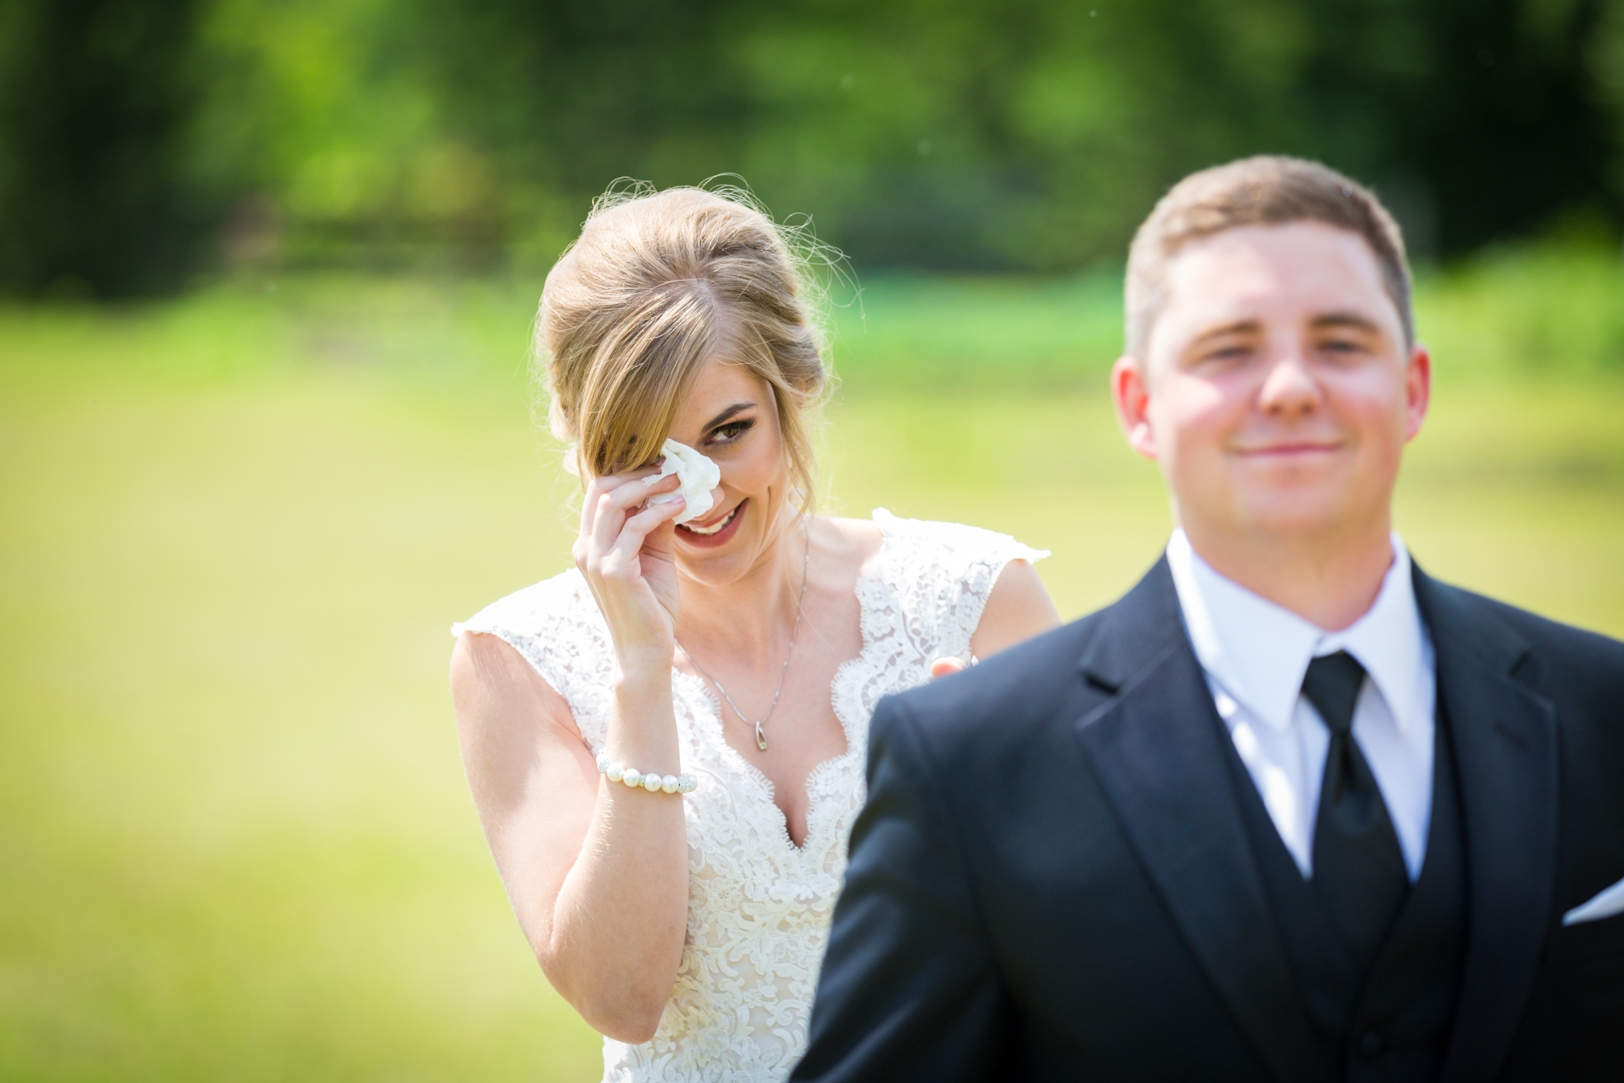 edmonton country wedding - Best First Look Photos